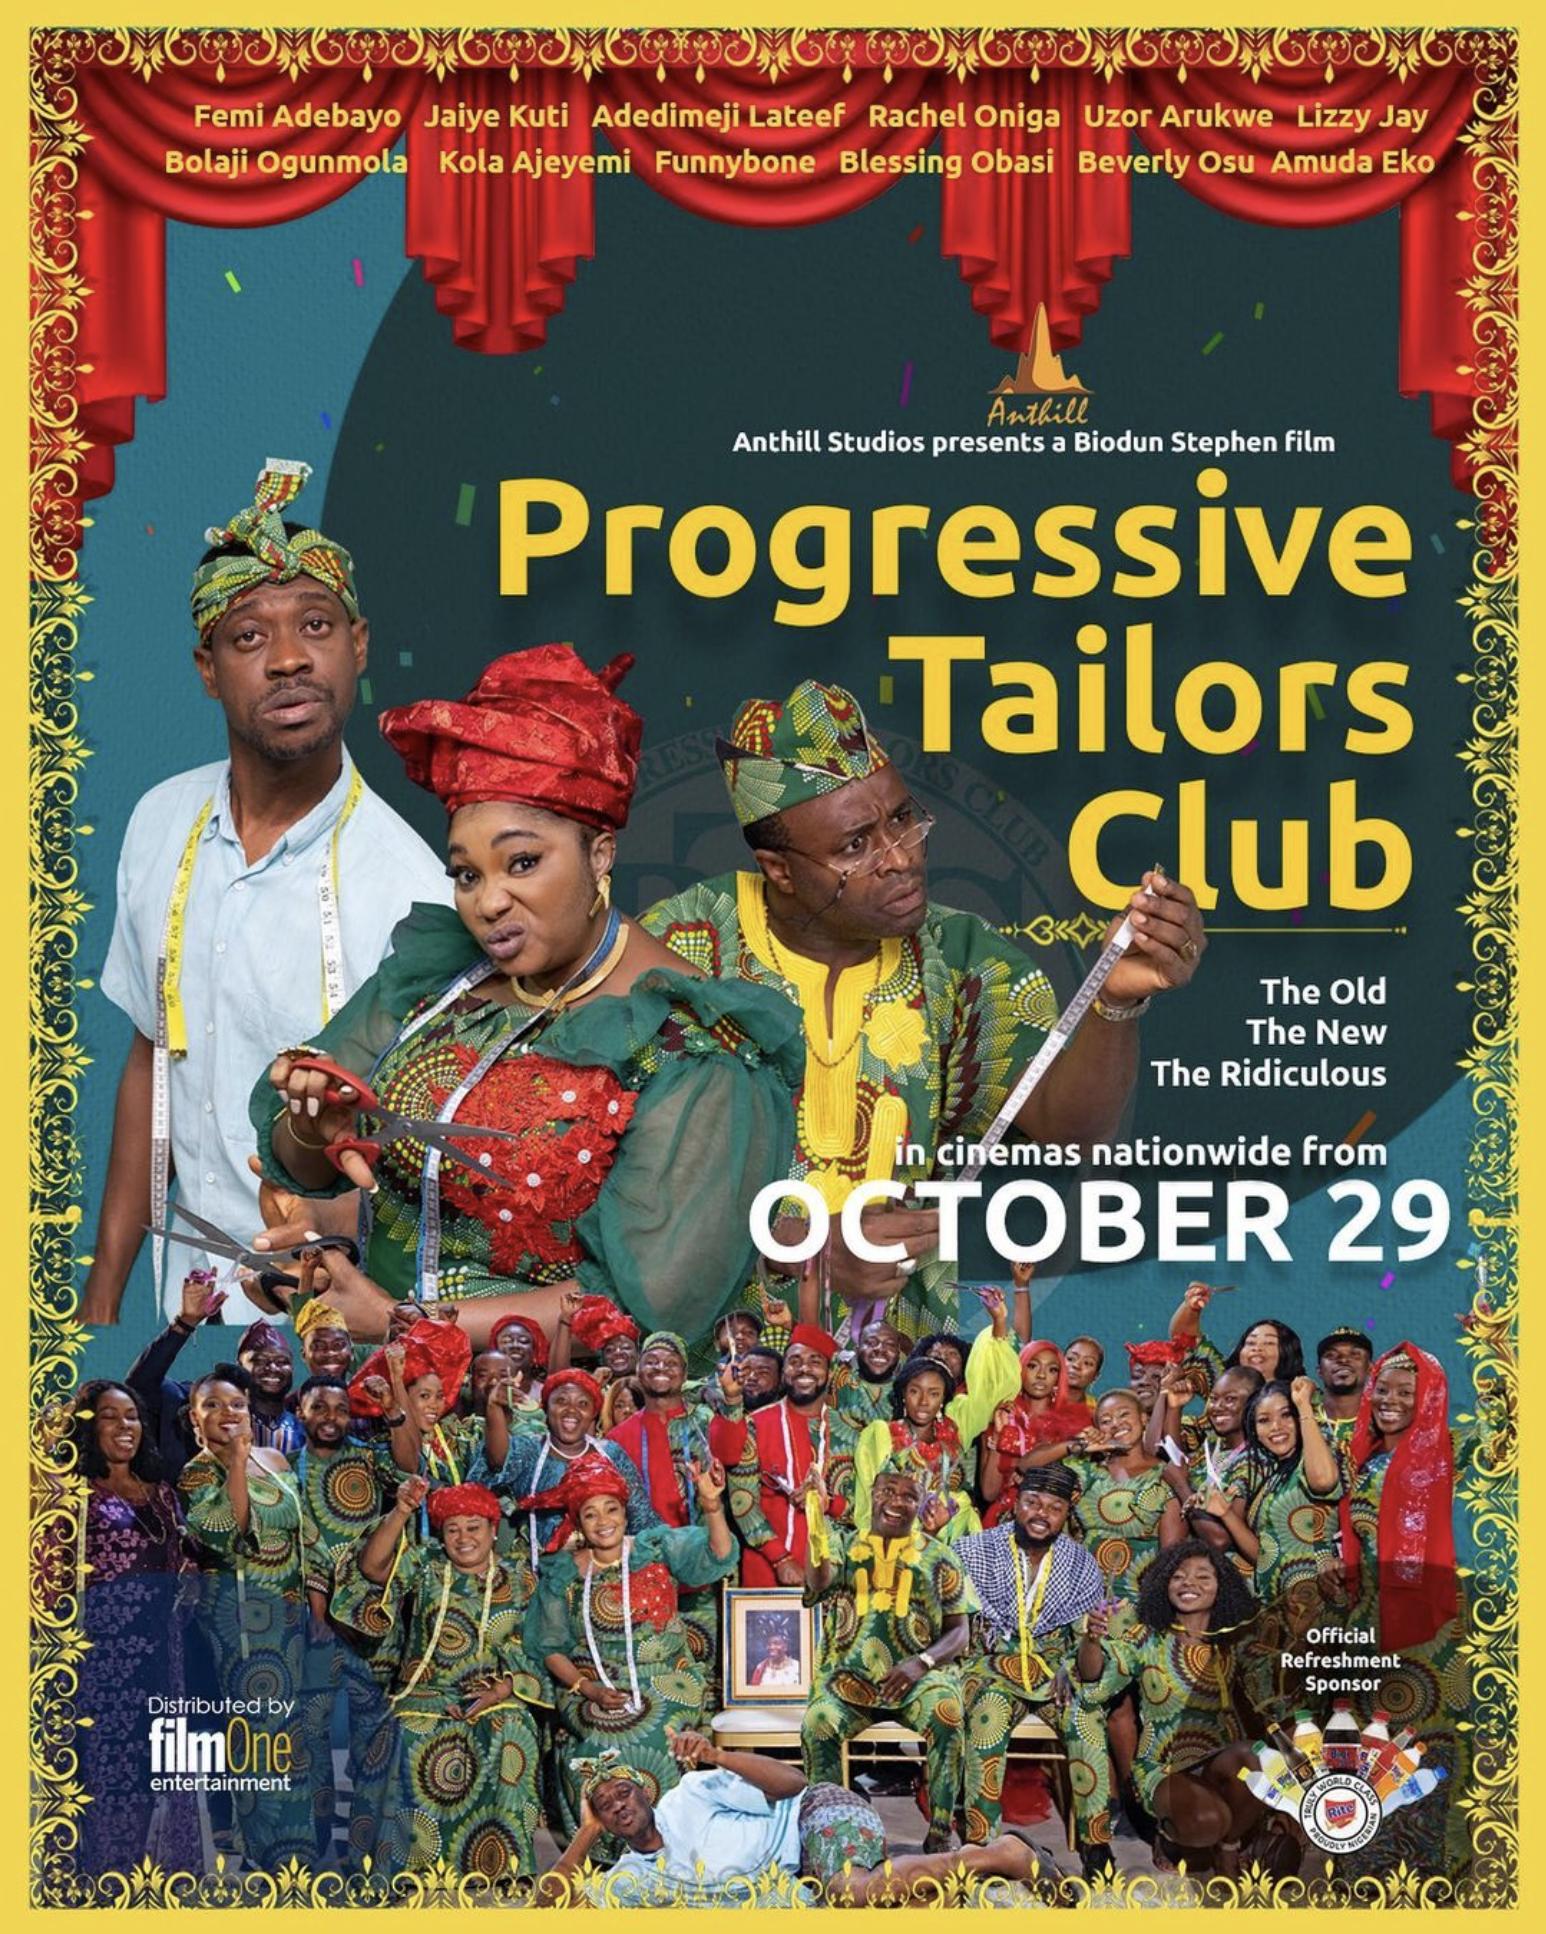 Progressive-Tailors-Club